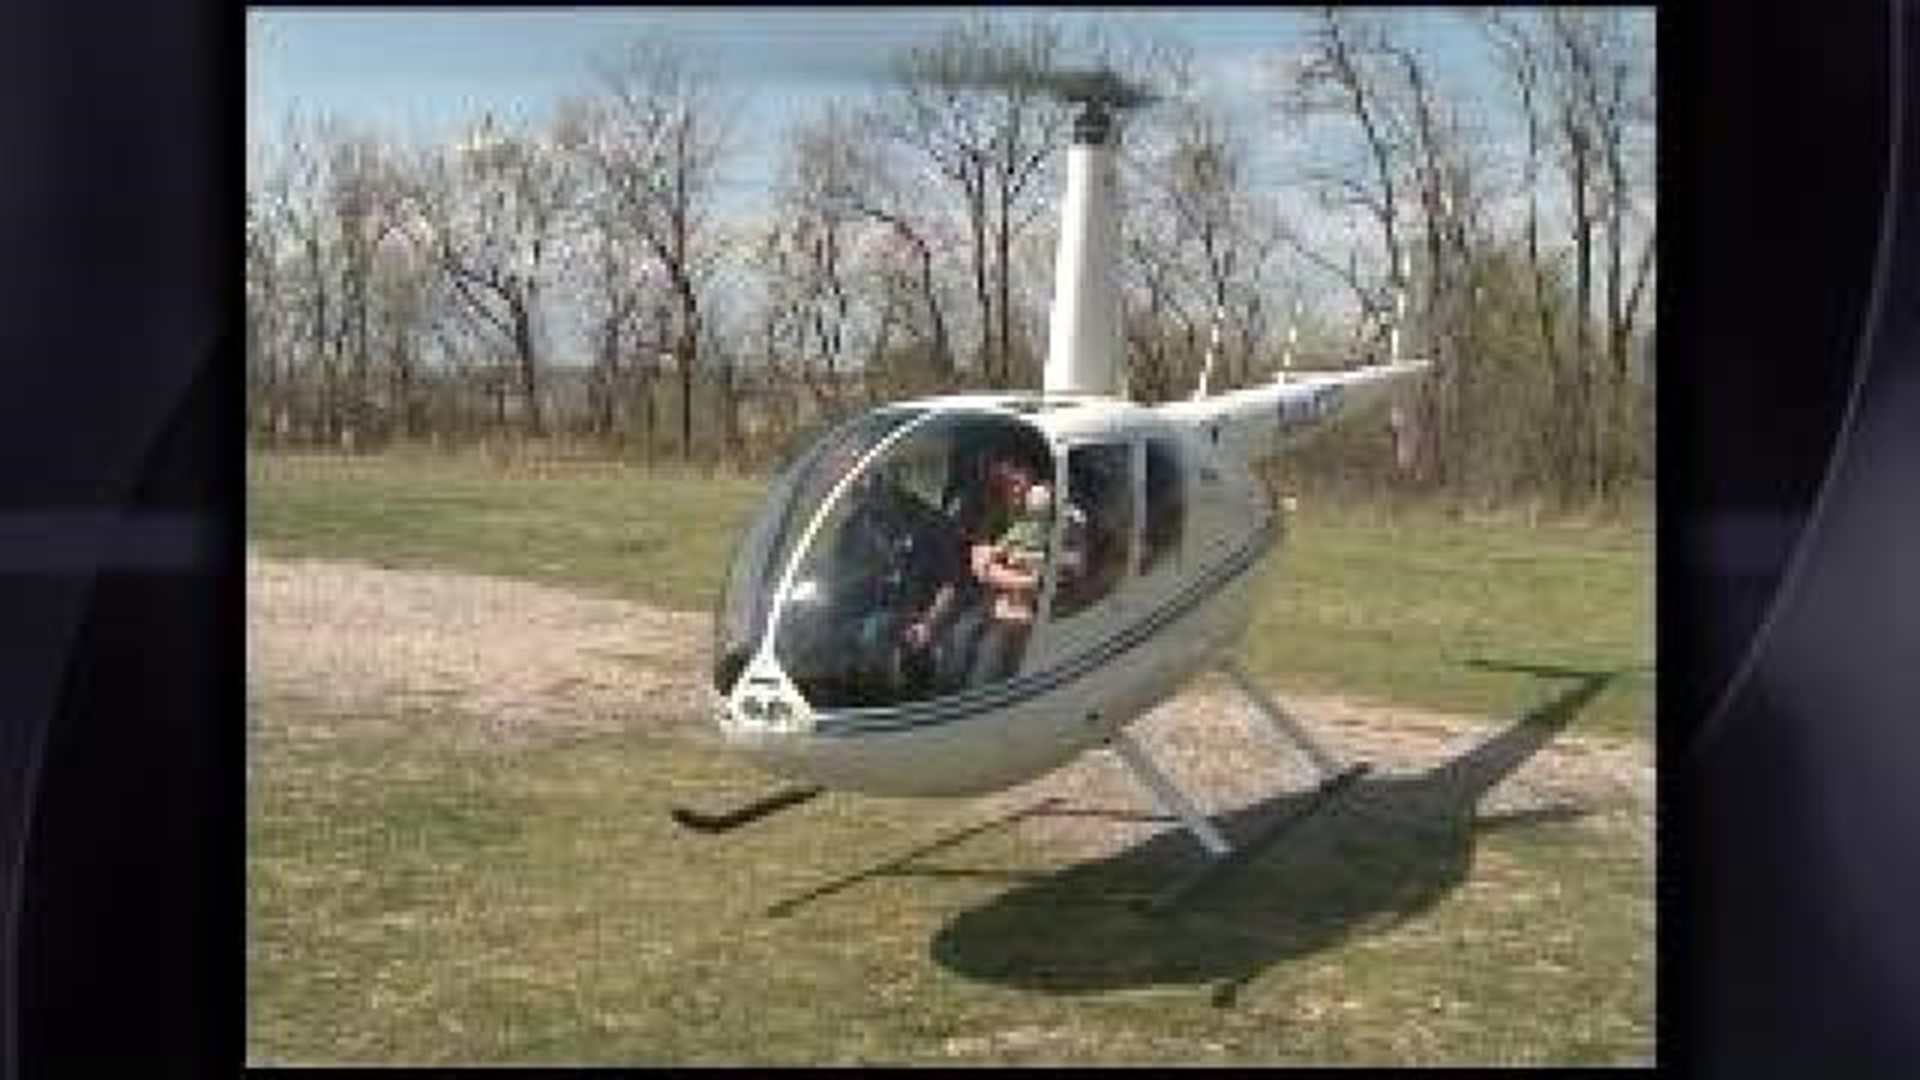 Fayetteville Helicopter Rides Offer Tours of Fayetteville Landmarks